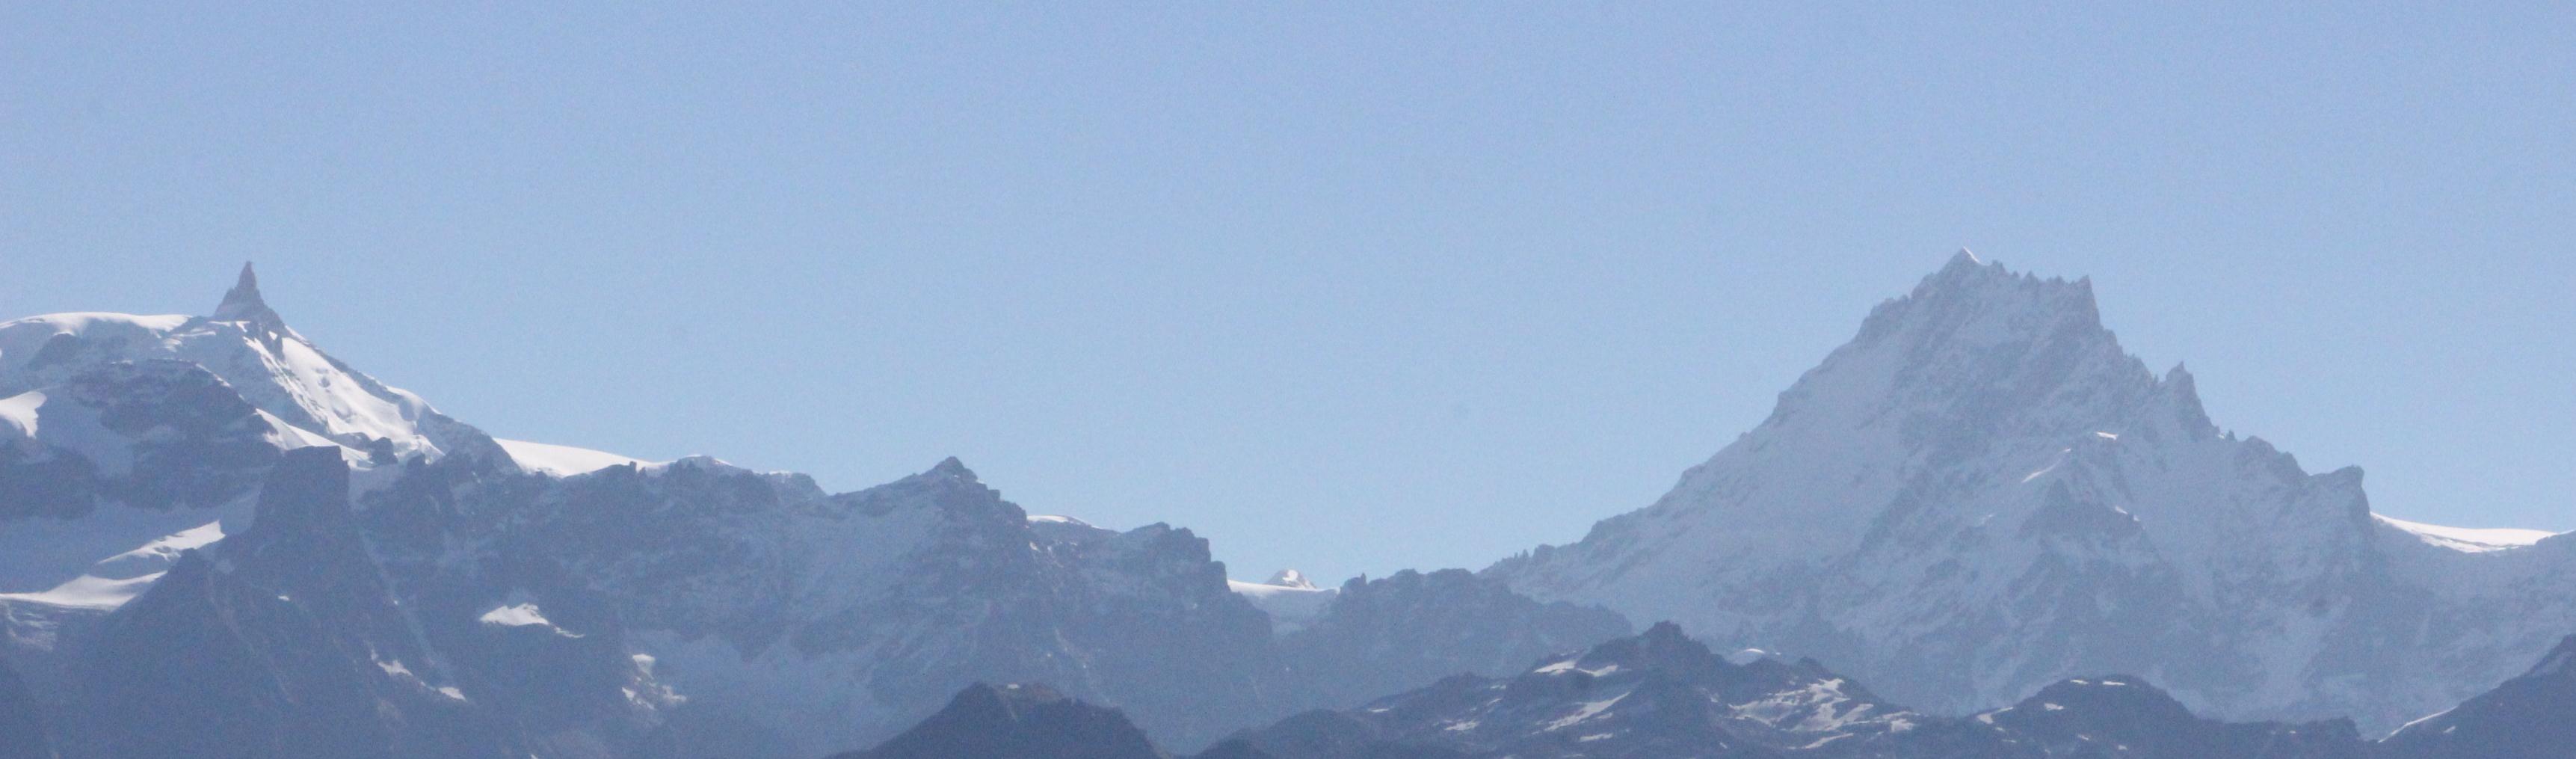 Mount Deo Tibba Peak Expedition